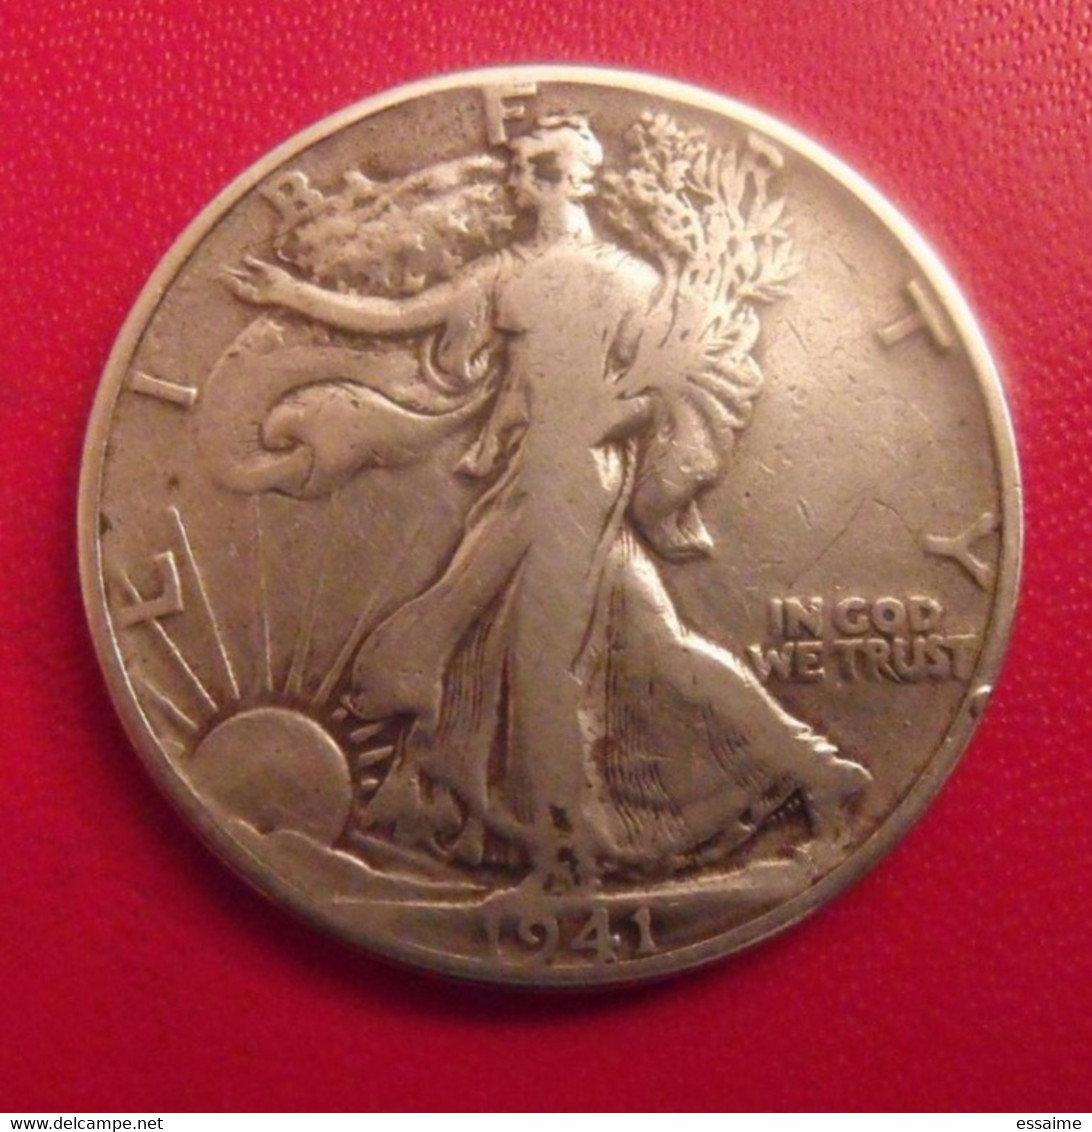 USA. United States Of America. Half Dollar 1941 - 1916-1947: Liberty Walking